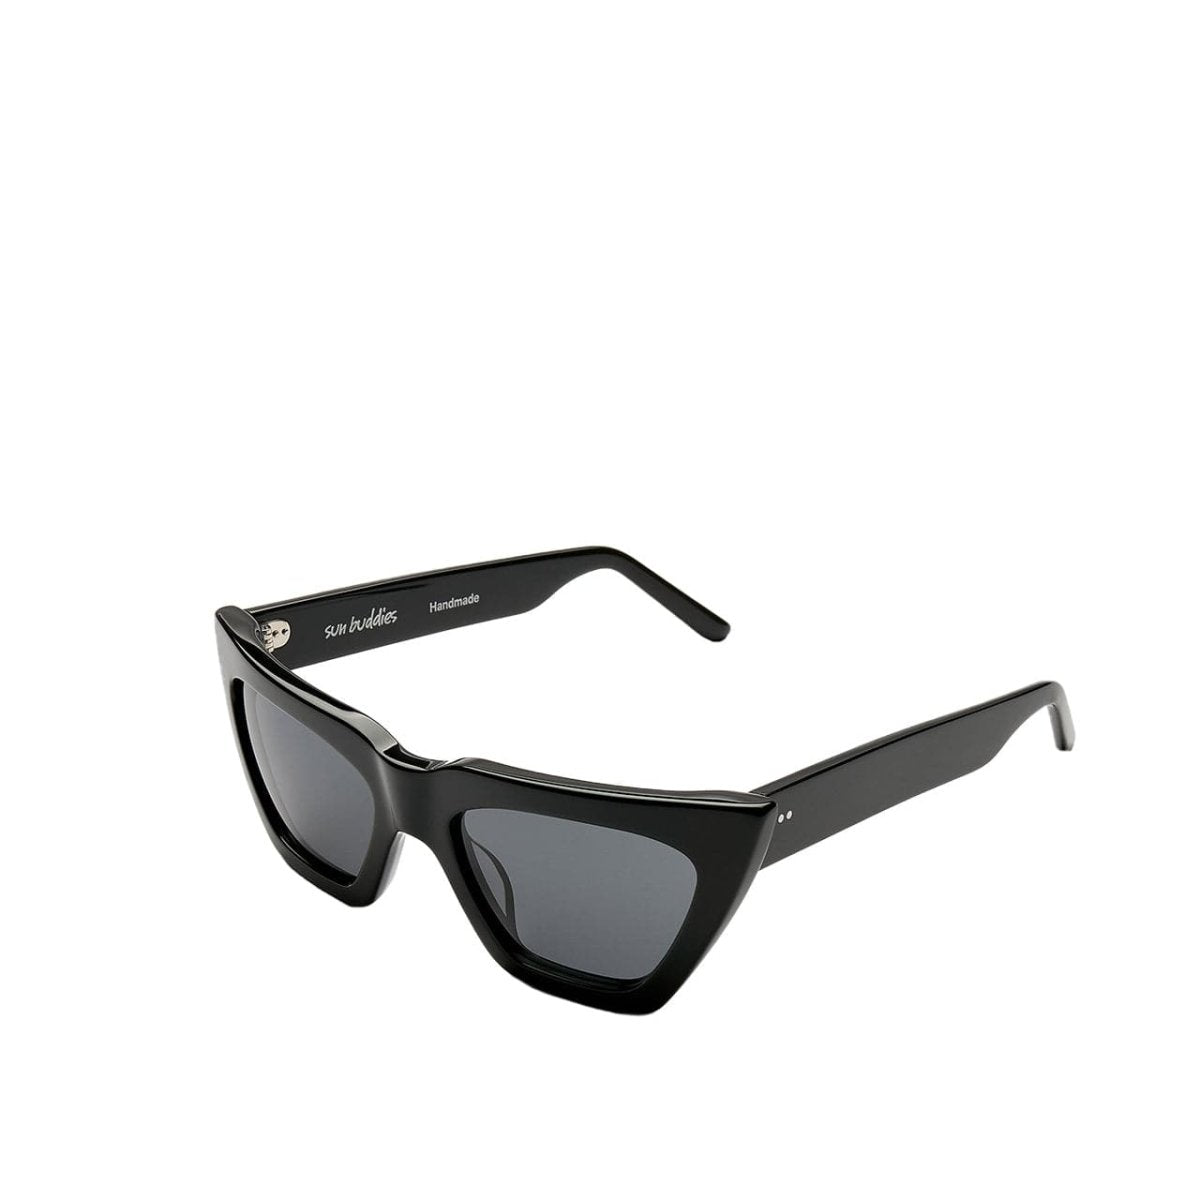 Carhartt WIP x Sun Buddies Grace Sunglasses (Schwarz)  - Allike Store